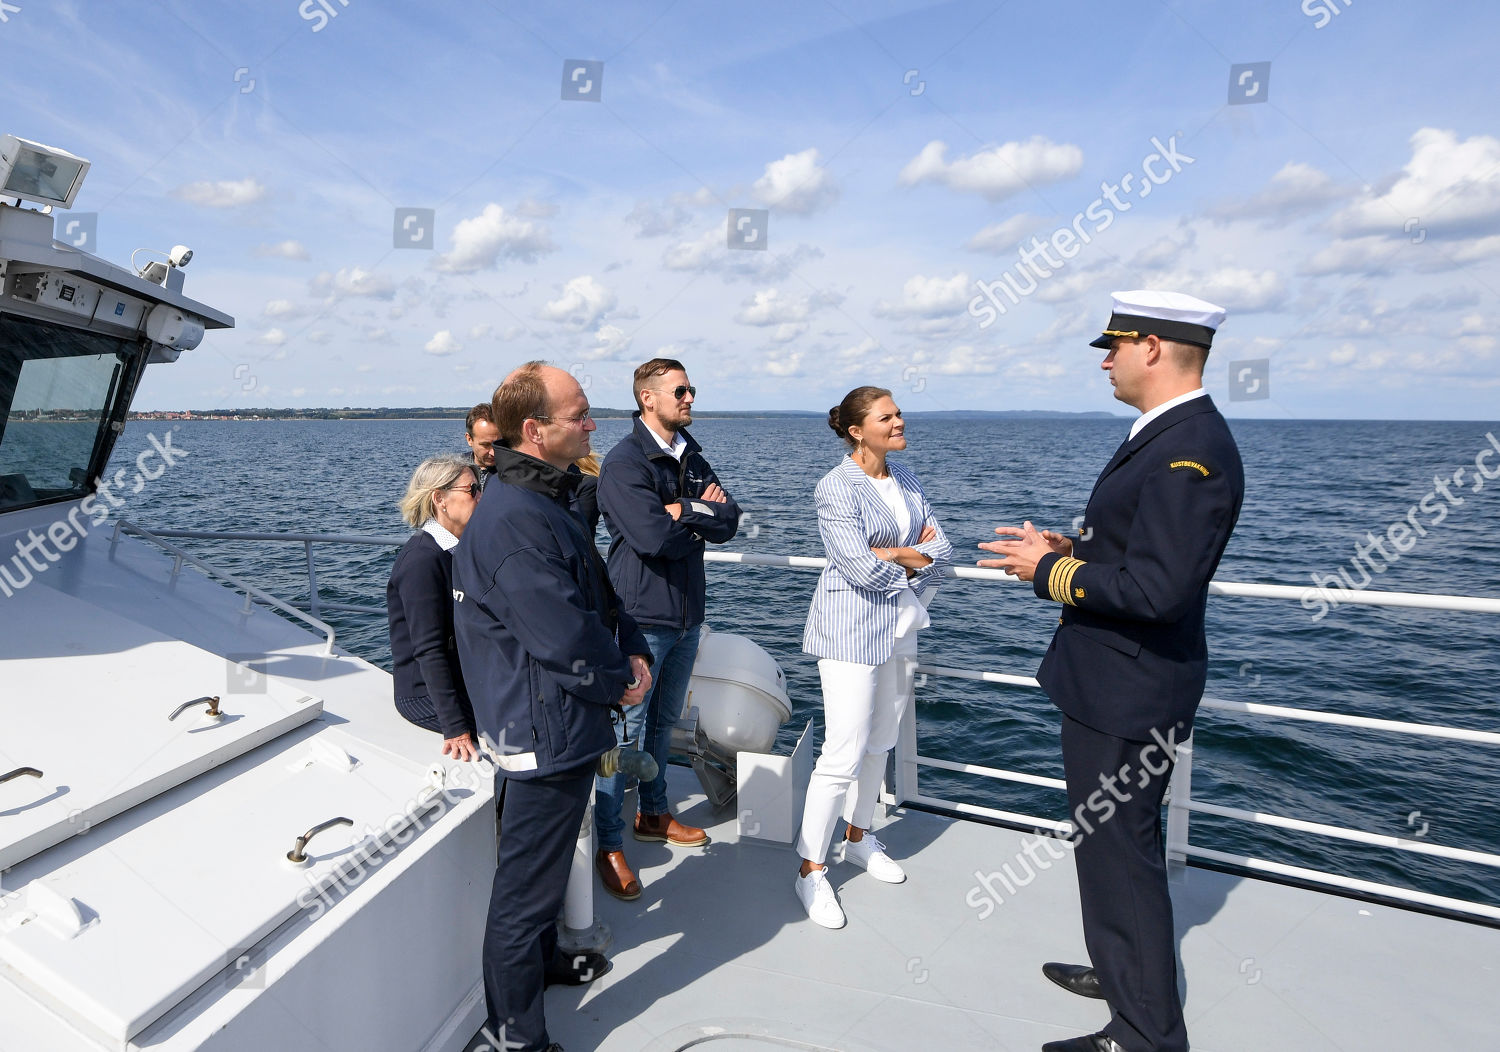 crown-princess-victoria-visits-the-centre-for-marine-research-simrishamn-sweden-shutterstock-editorial-10369010w.jpg